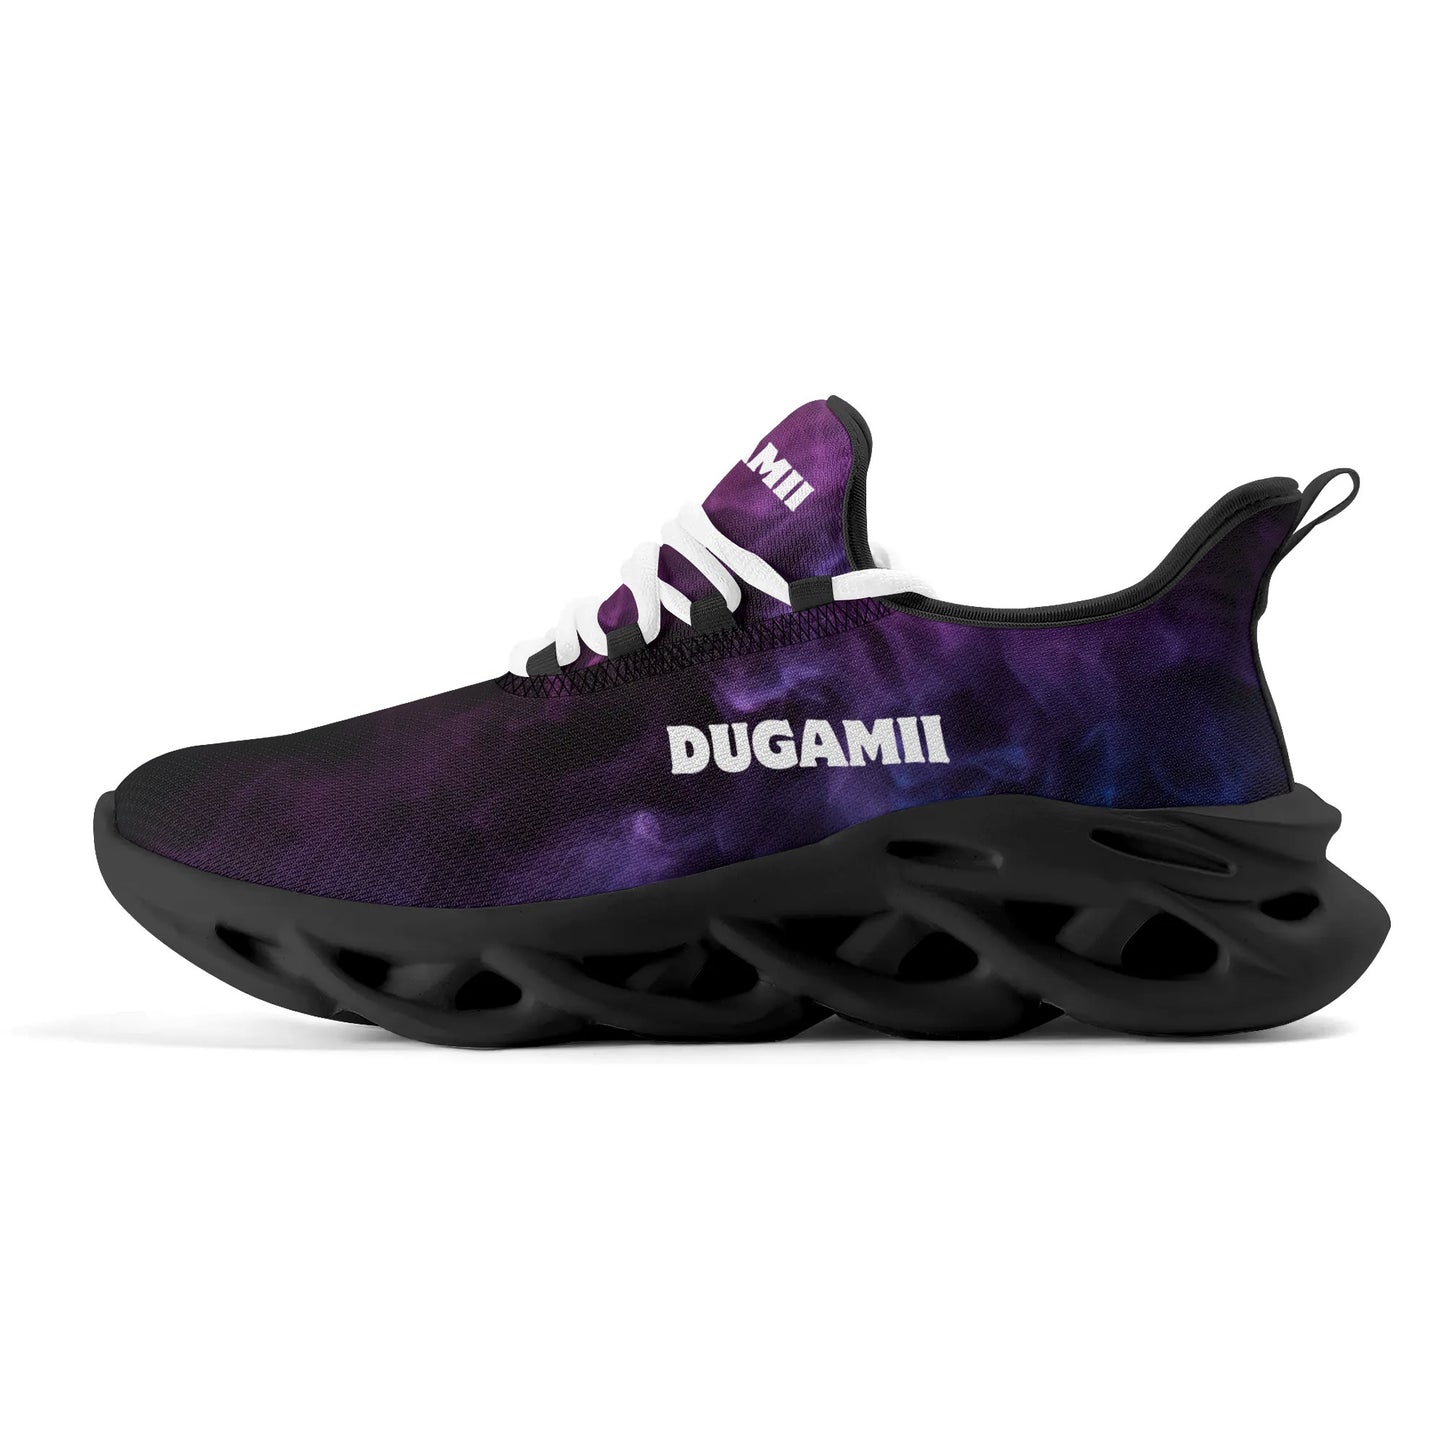 Mens DuGamii Premium M-Sole Star Walker Limited Edition Black Training Sneakers